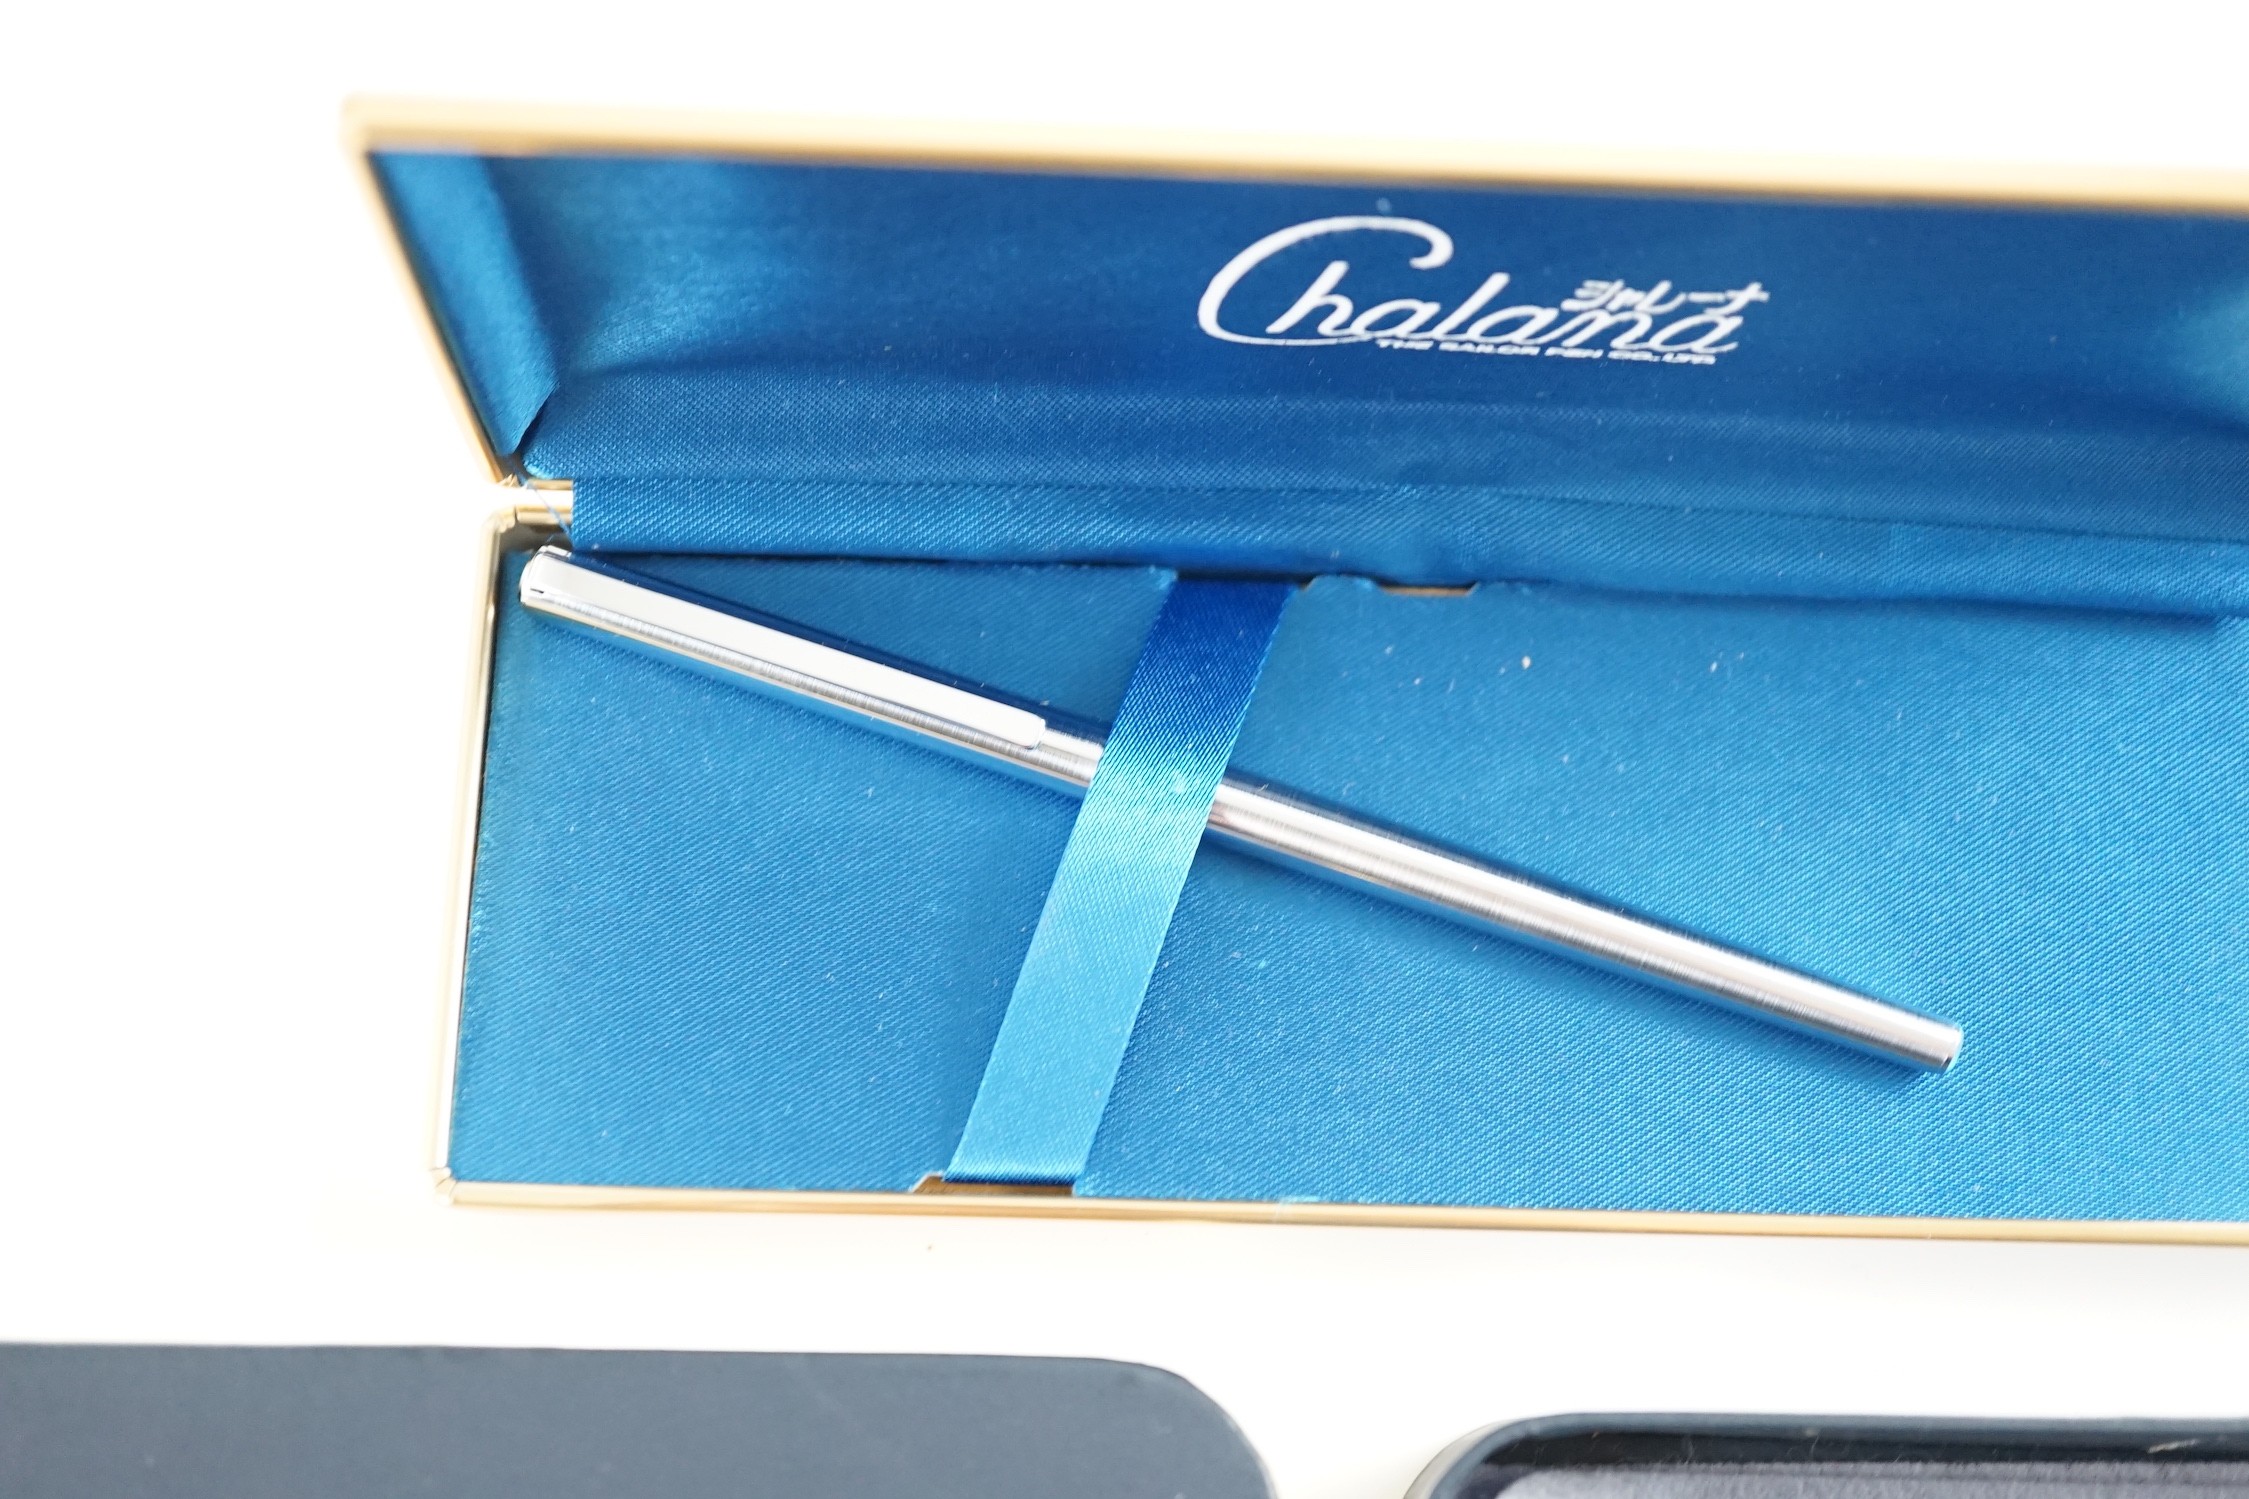 An S de Cartier navy blue leather cigarette case with blue cabochon set clasp, 11 cm., boxed and a Chalana note pen, cased.